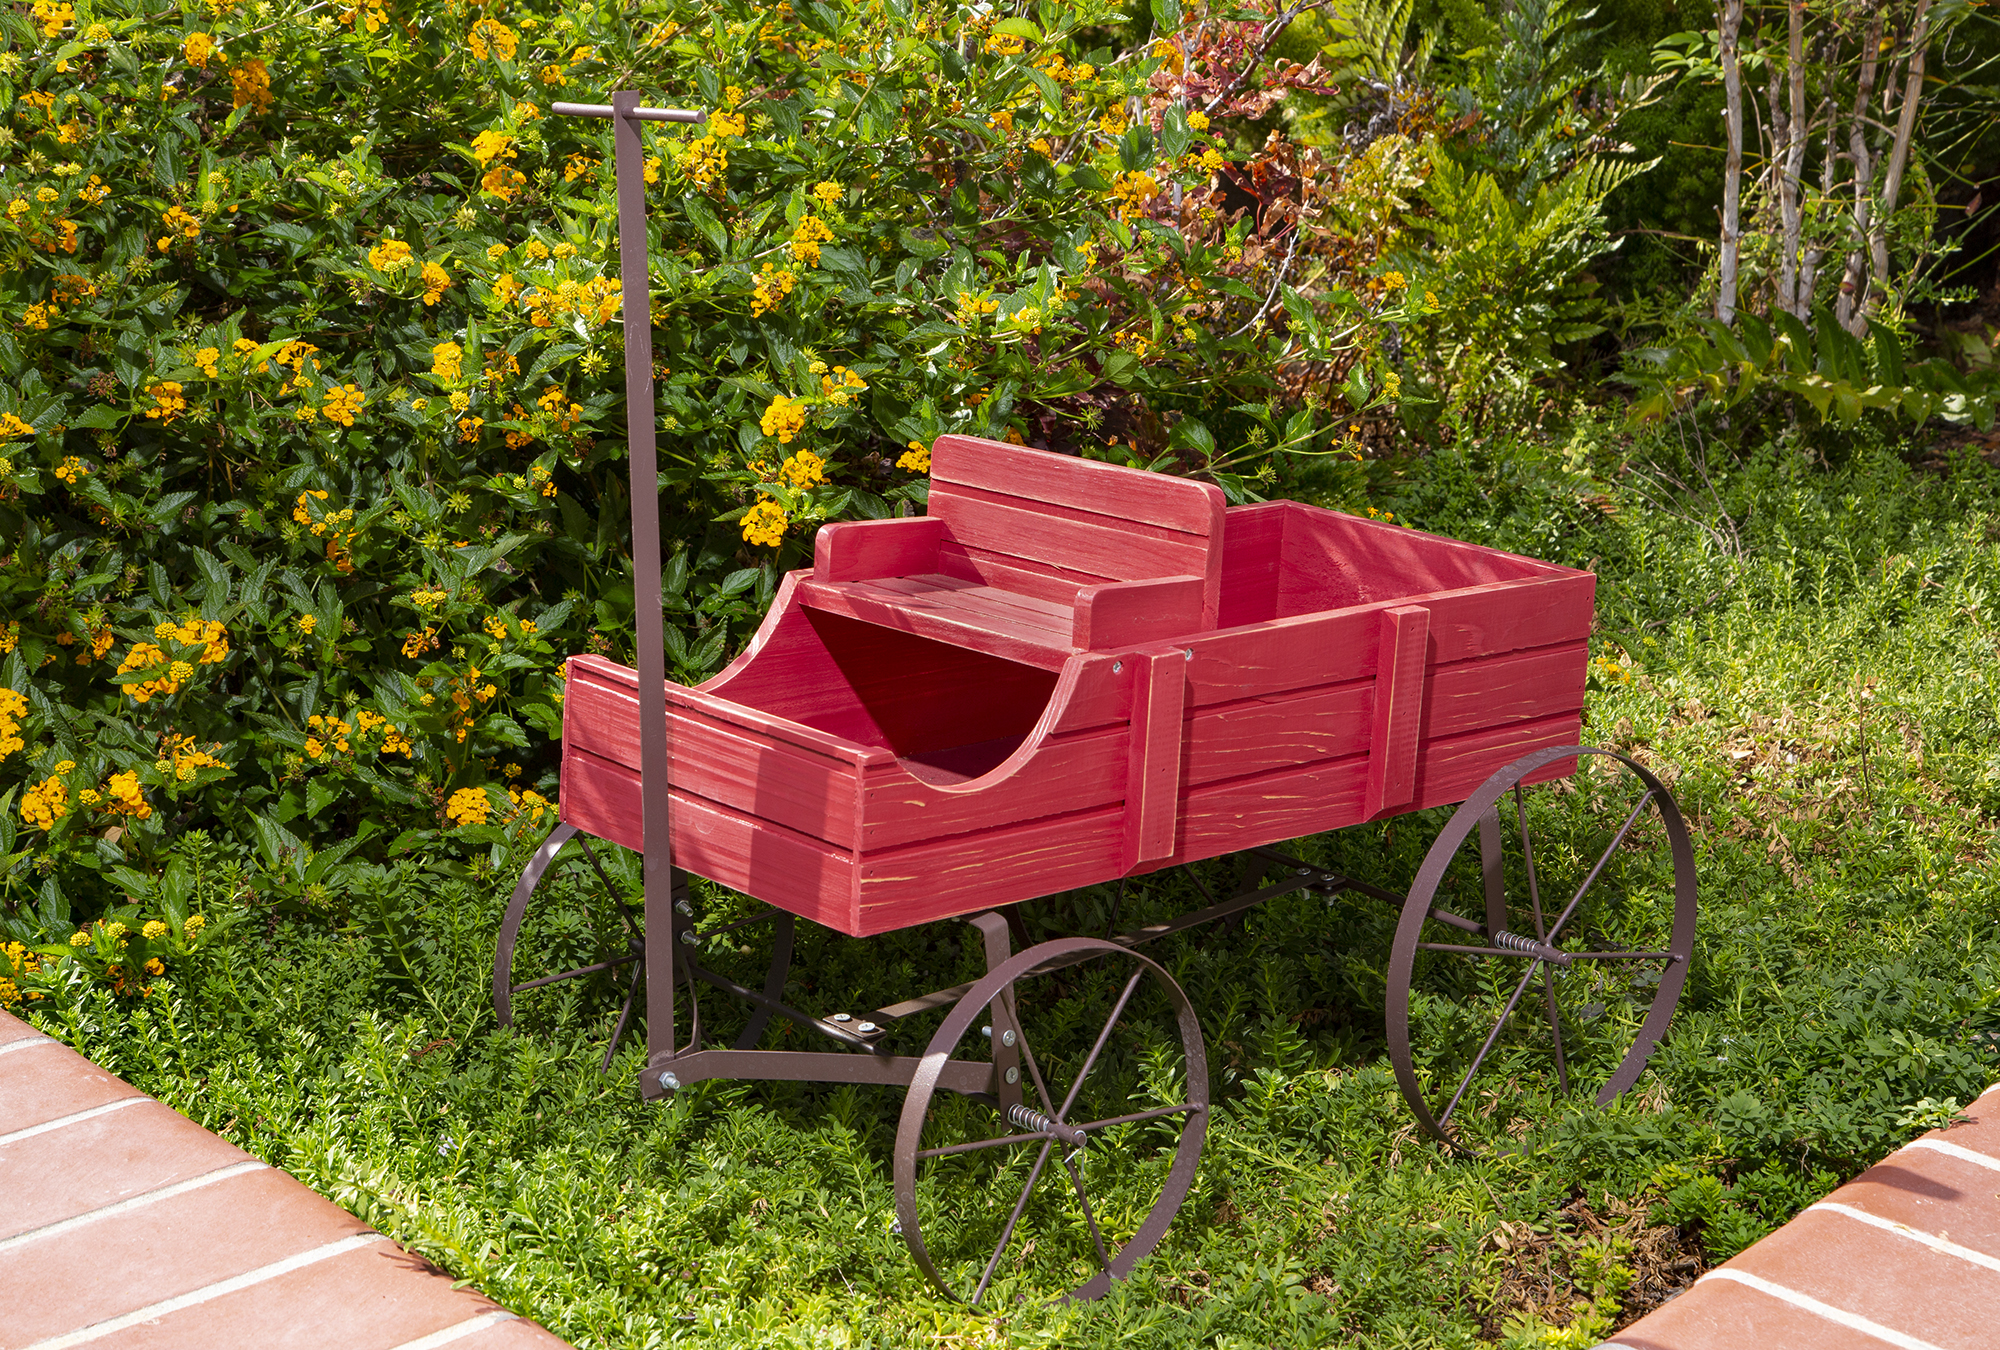 https://shineco.com/wp-content/uploads/2021/09/4941R-LS1-Decorative-Buckboard-Wagon-Garden-Planter-Red.jpg